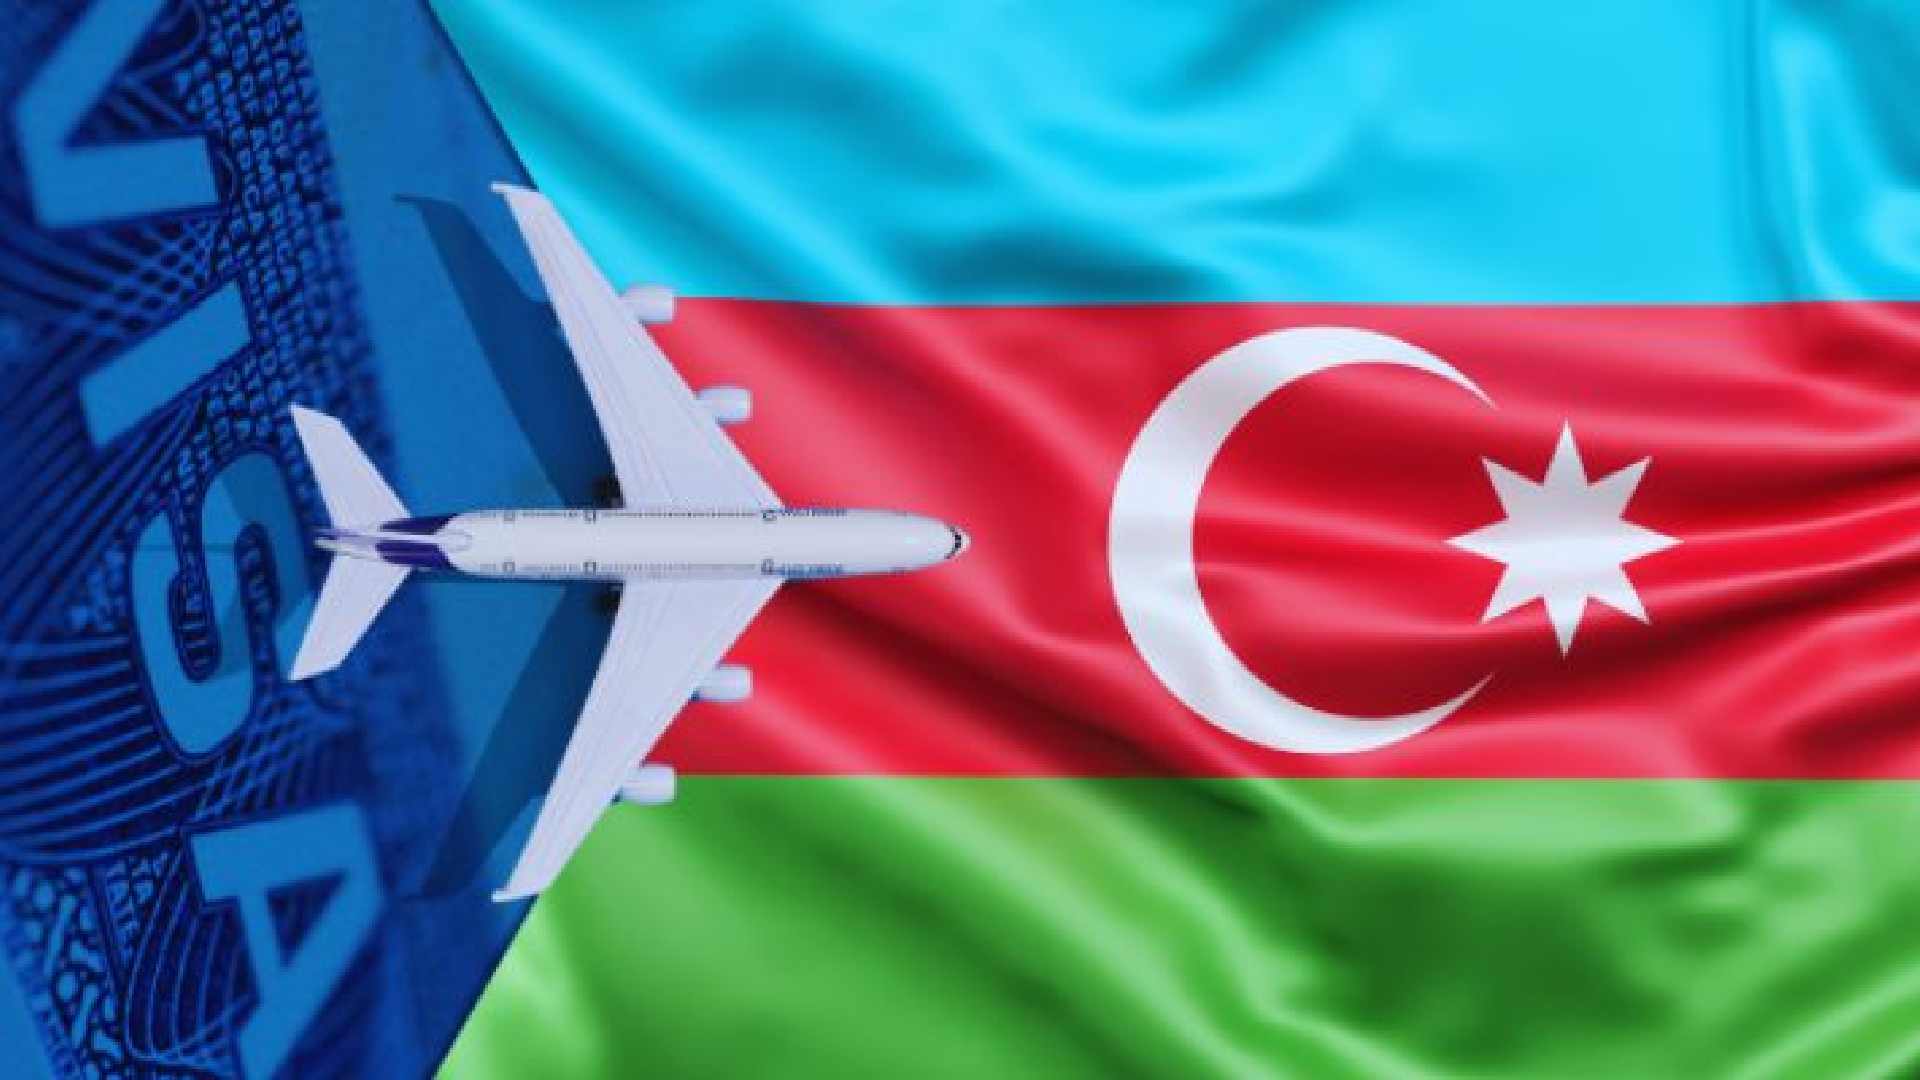 Azerbaijan visa on arrival for UAE residents cost